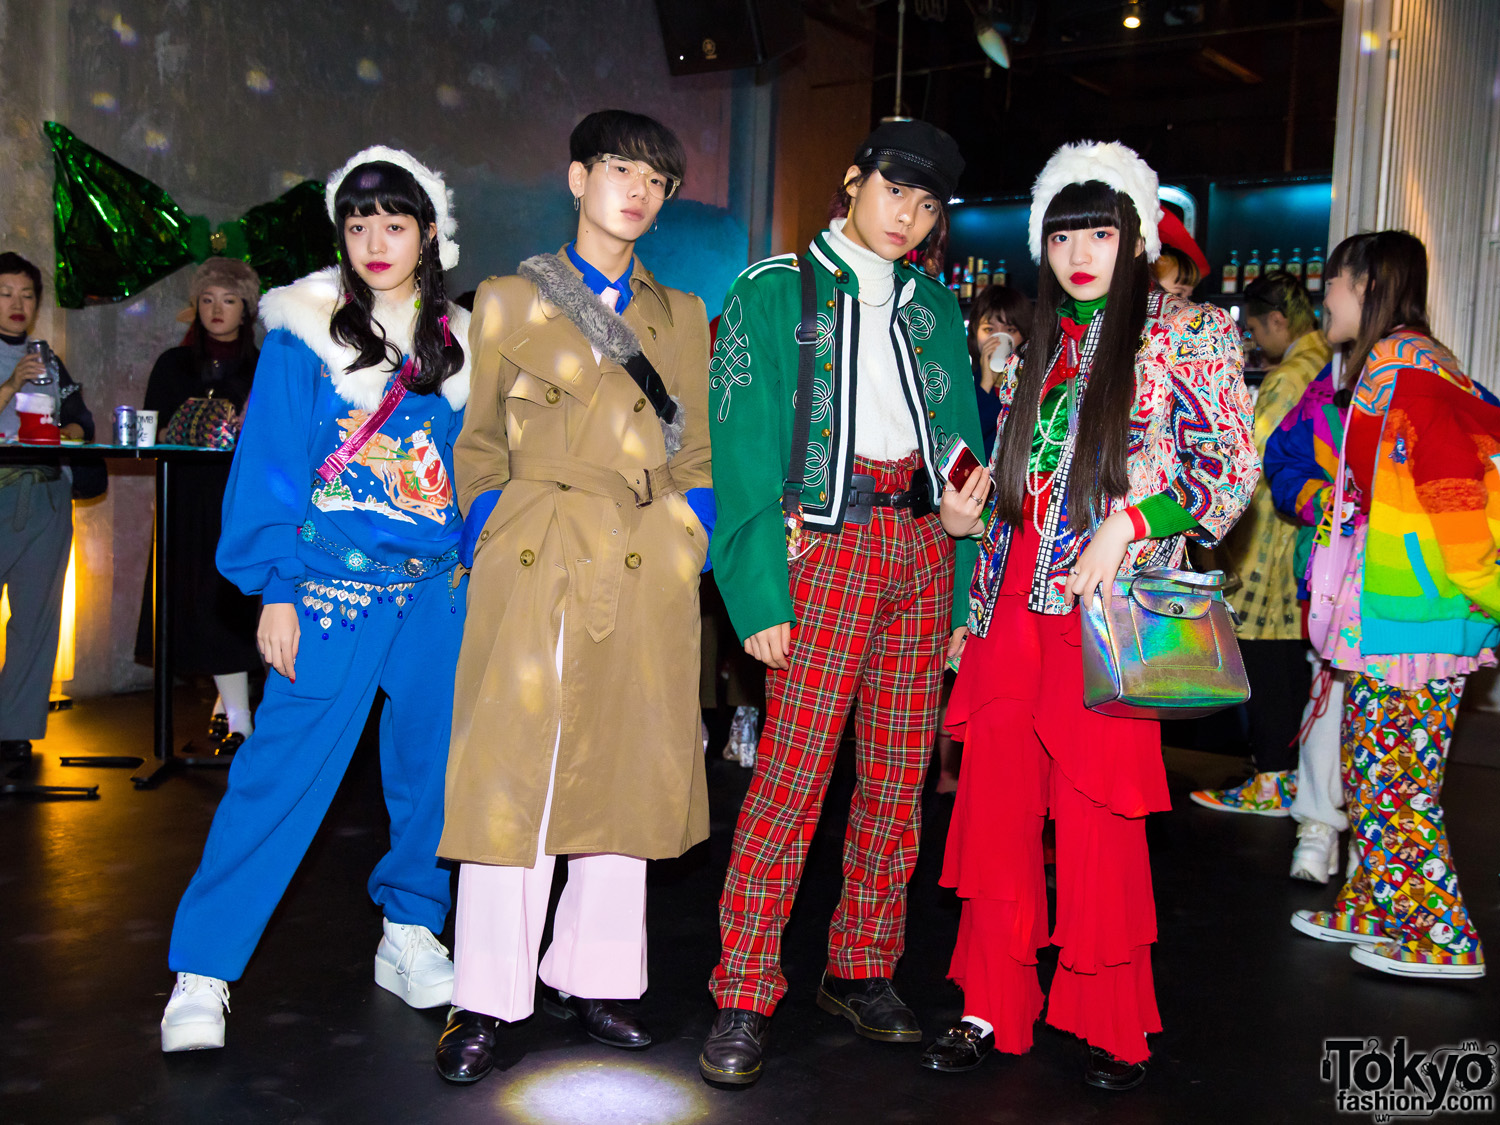 Tokyo Fashion Snaps at Fanatic Magazine Party, Winter 2017